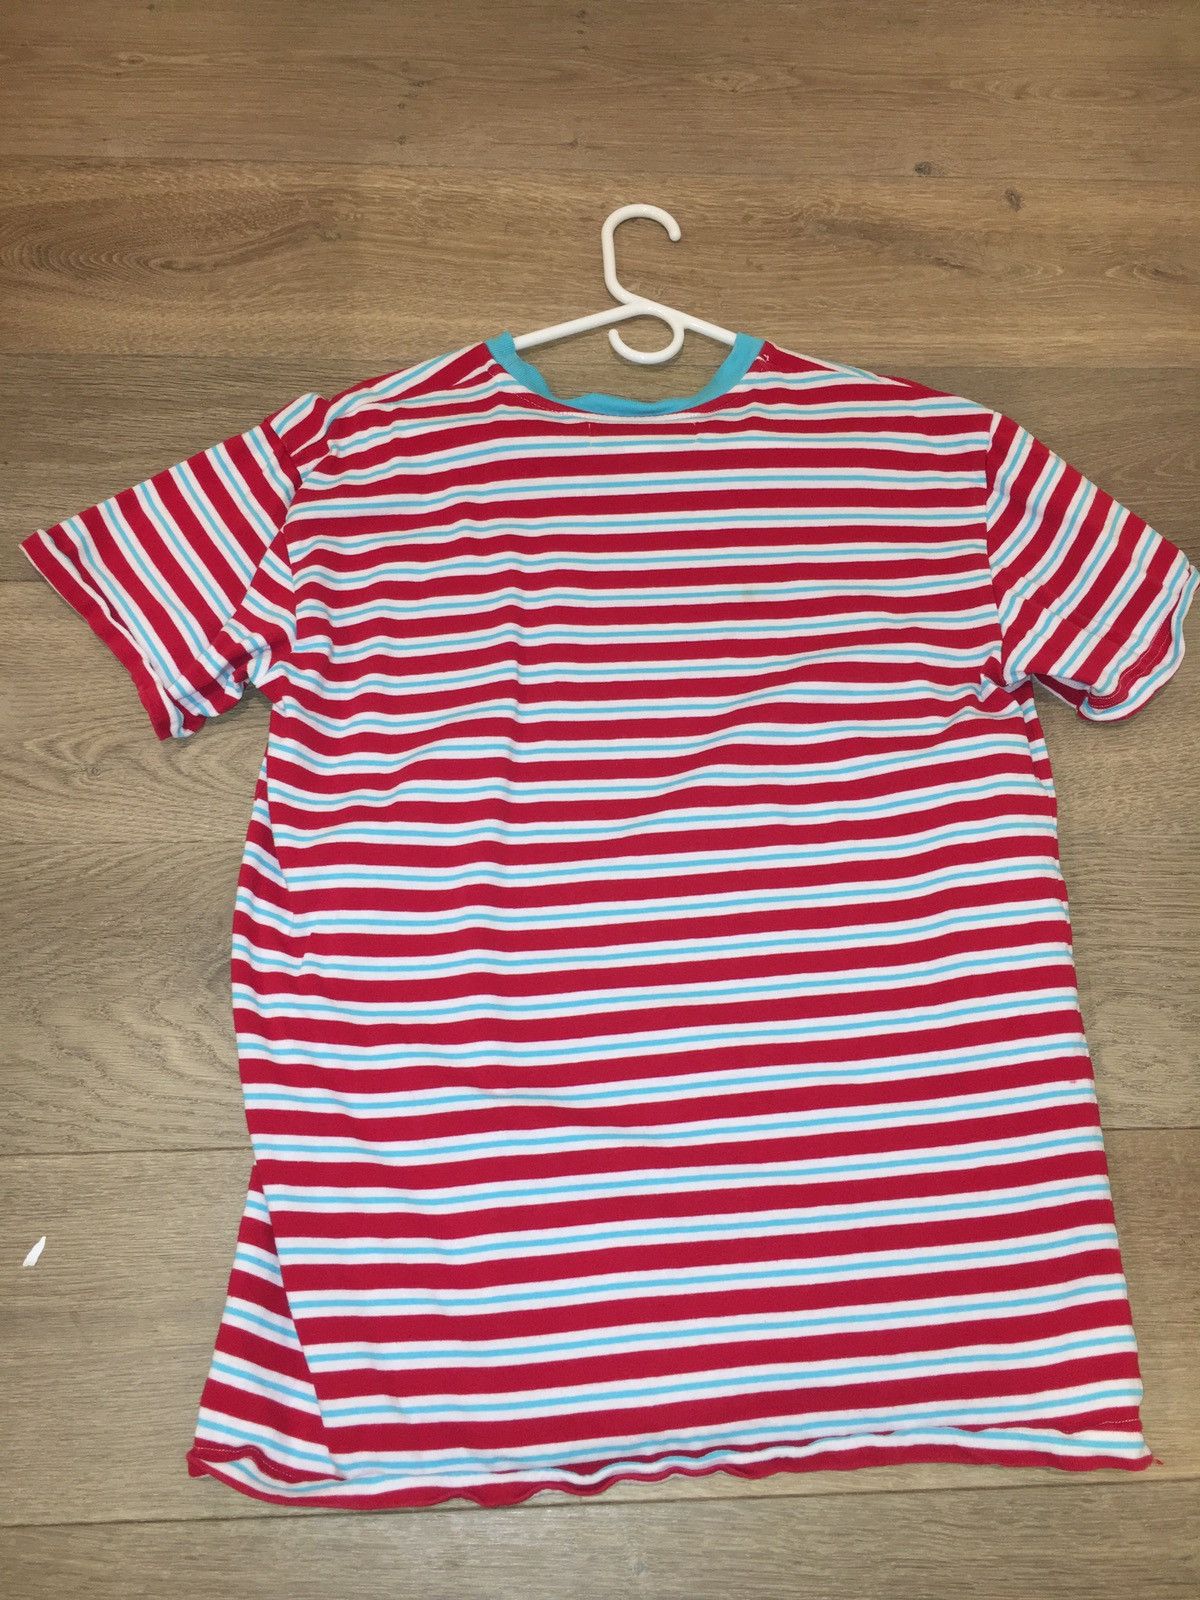 Golf Wang Red Striped Shirt Size US M / EU 48-50 / 2 - 2 Preview